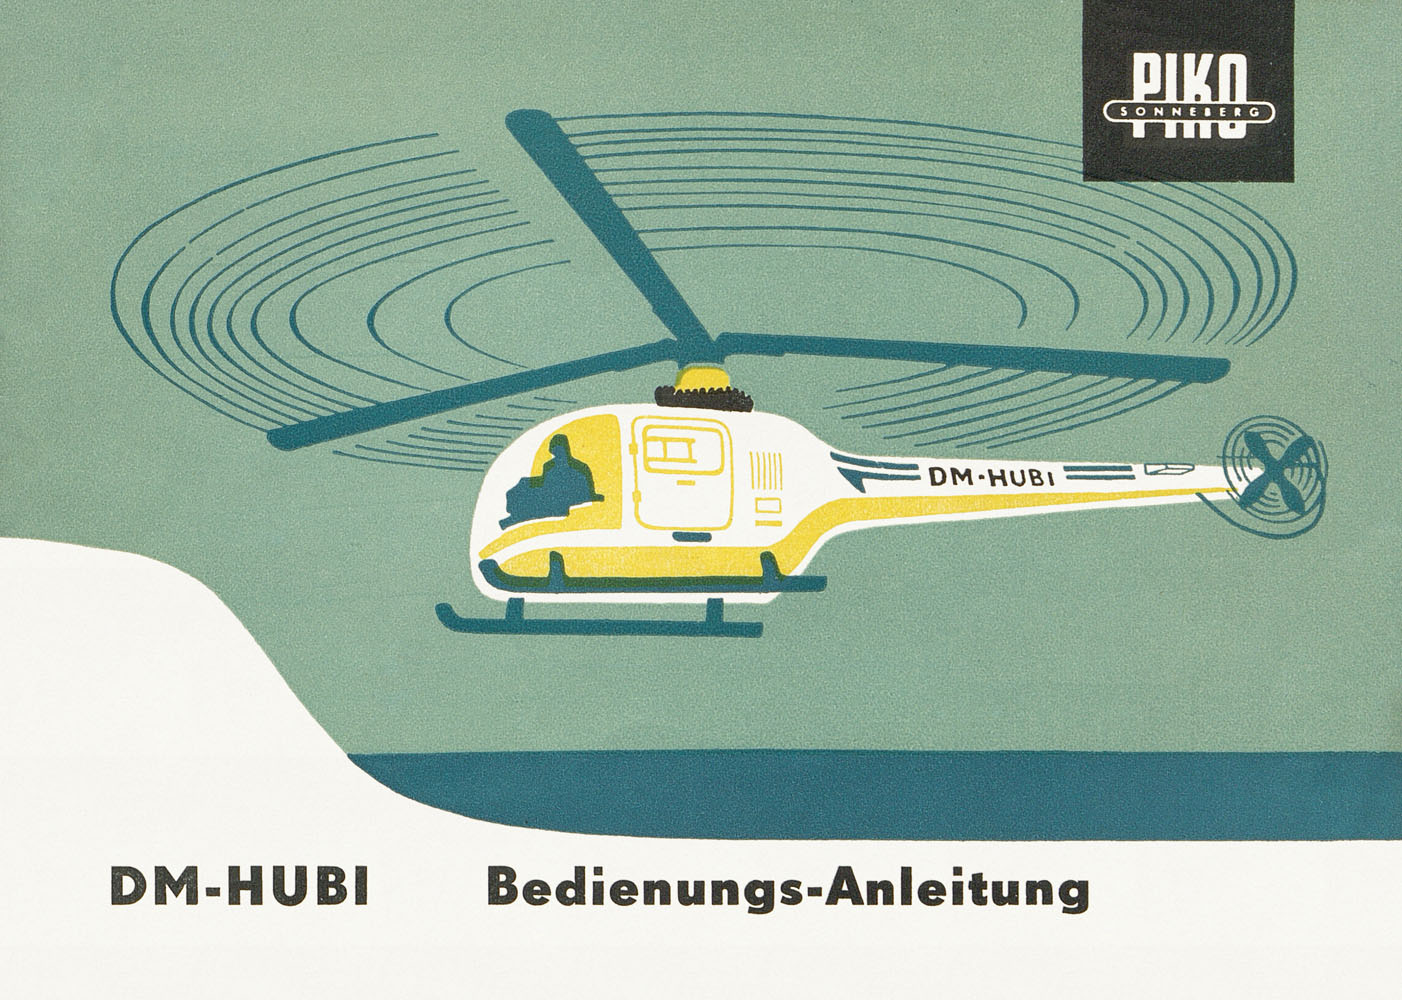 Piko DM-Hubi Bedienungsanleitung 1964